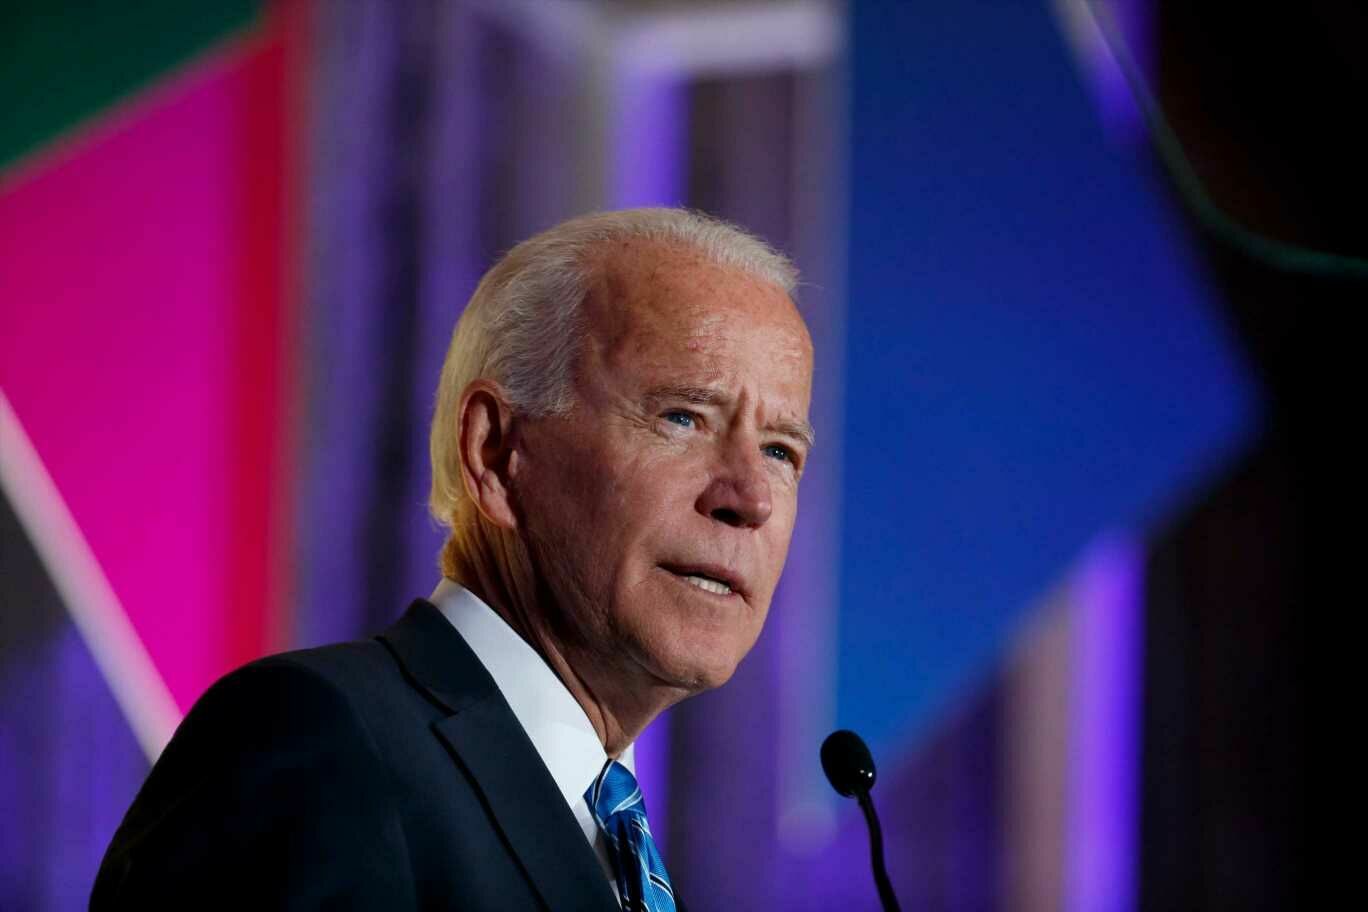 Joe Biden says Americans should not fear the threat of nuclear war